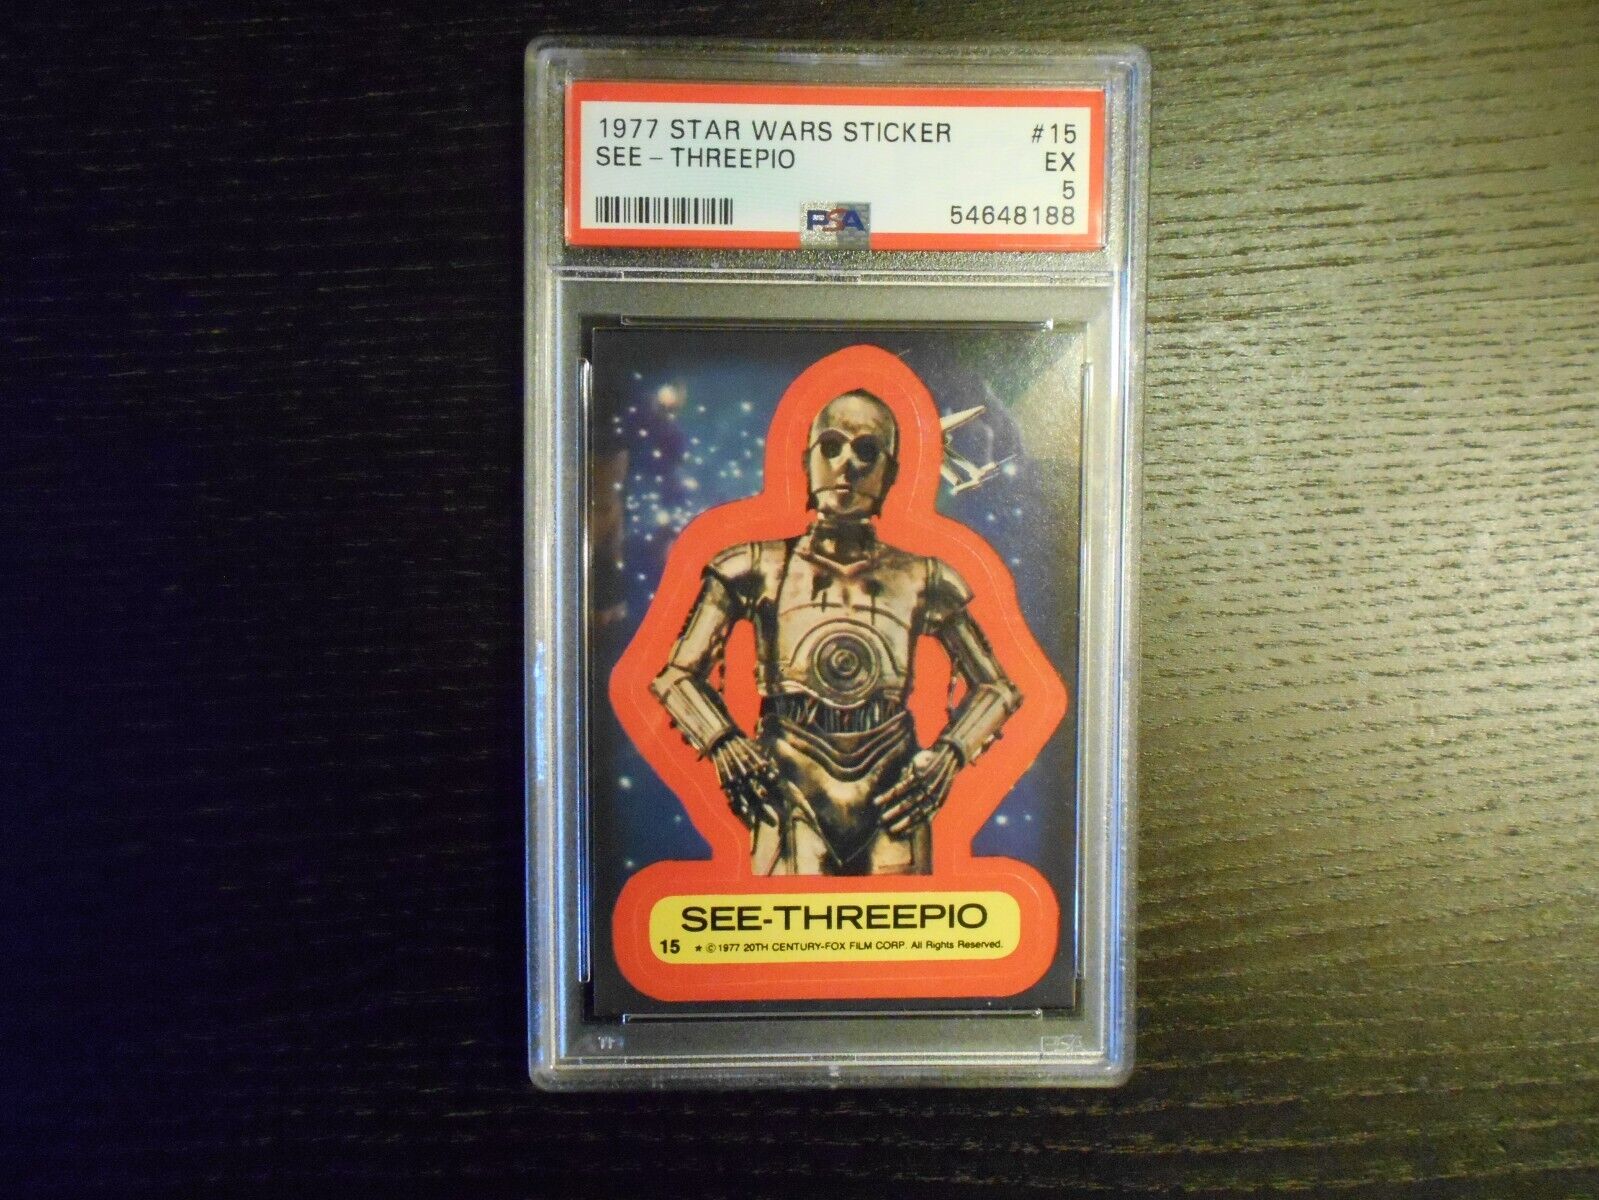 1977 Topps STAR WARS S2 (Red) Card #15 C-3PO See-Threepio Sticker (PSA 5 EX) 💎